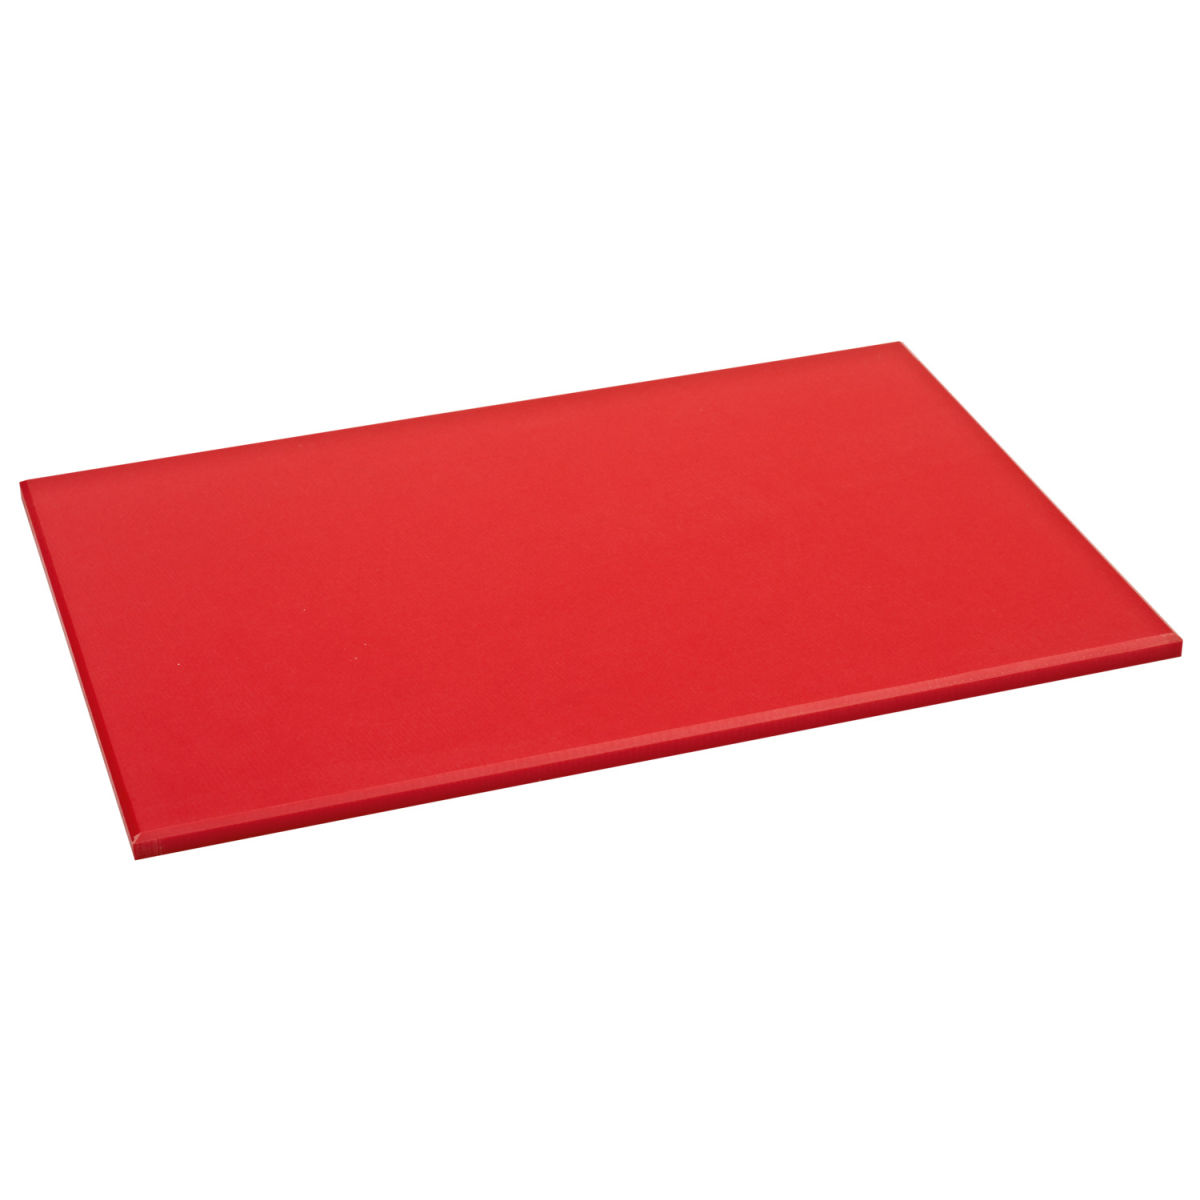 PULSIVA Snijplank Clever OSF 30x45 cm; 45x30x1.2 cm (LxBxH); rood